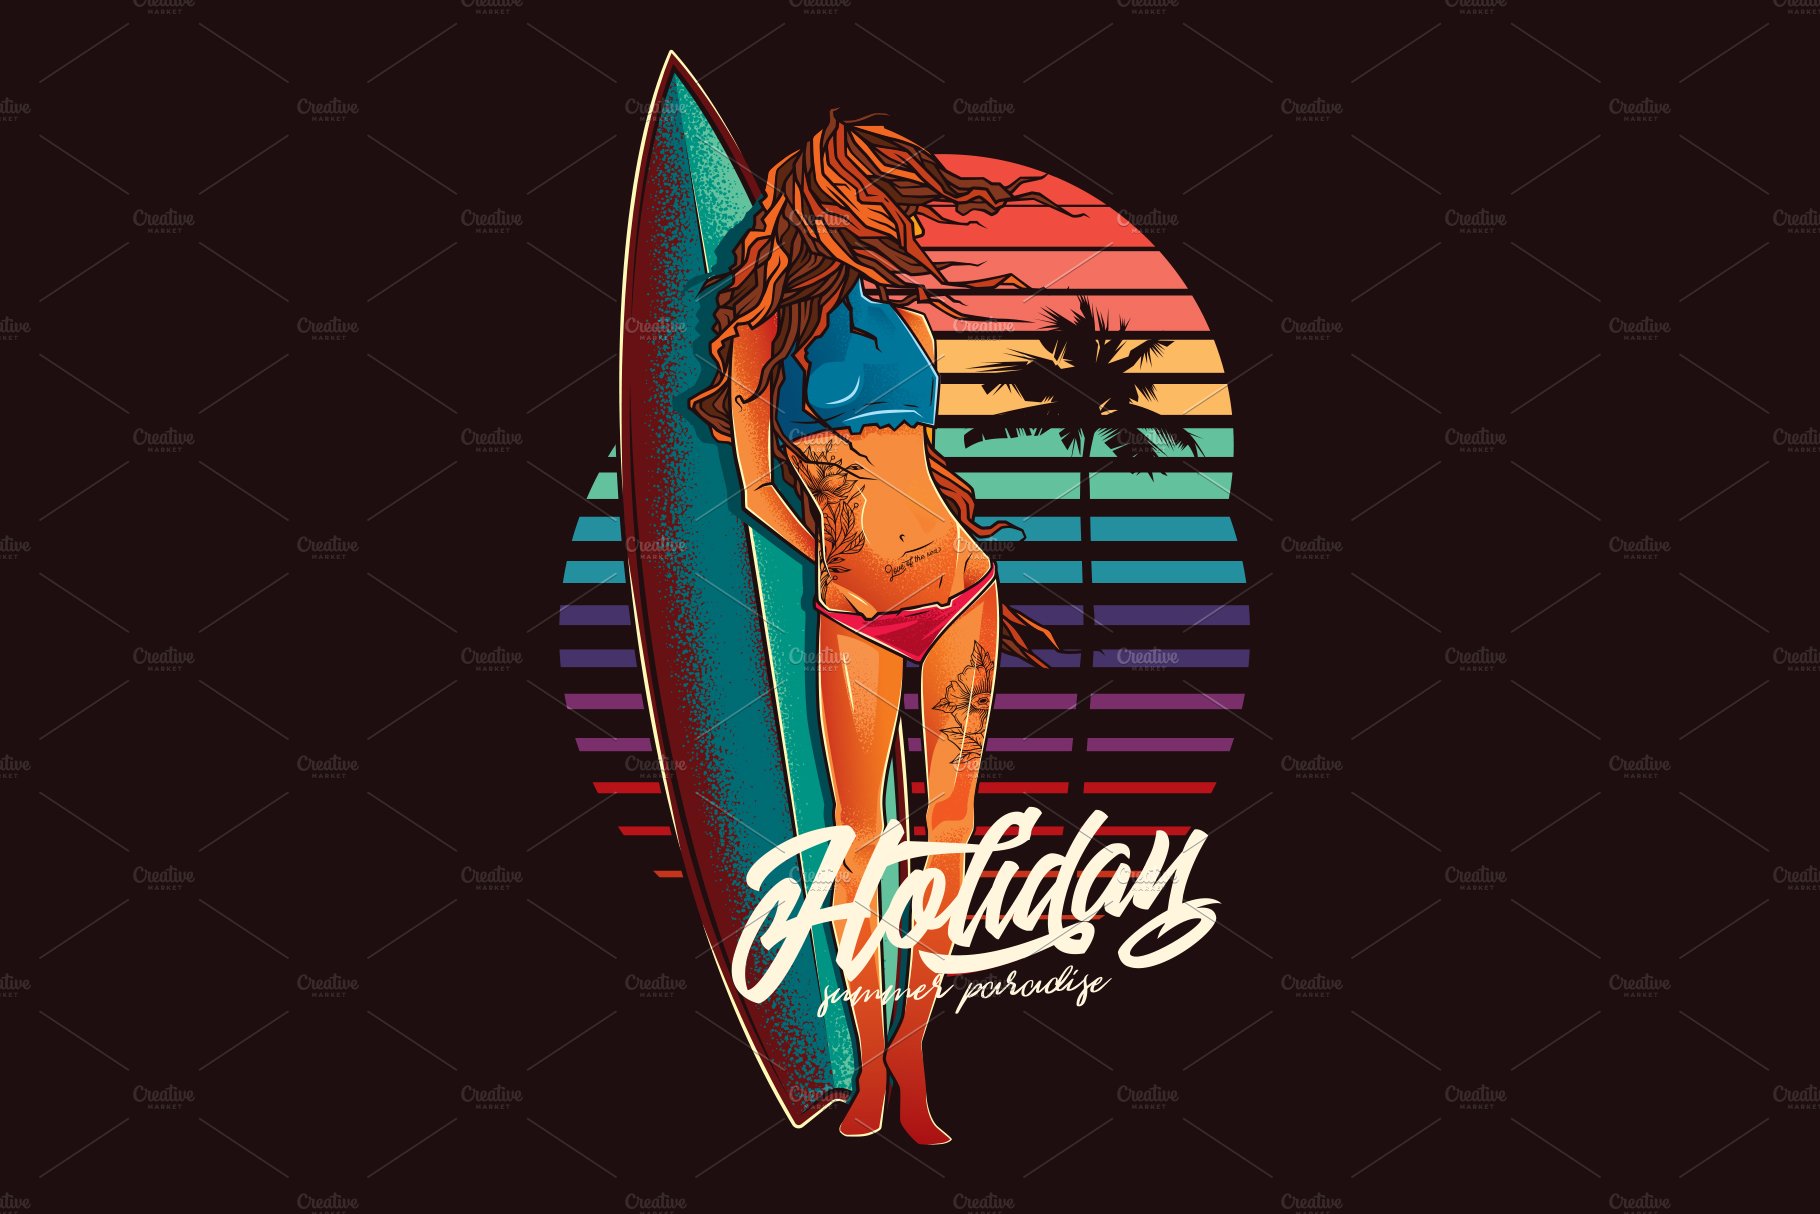 GIRL SURFING SUNSET T-SHIRT DESIGN cover image.